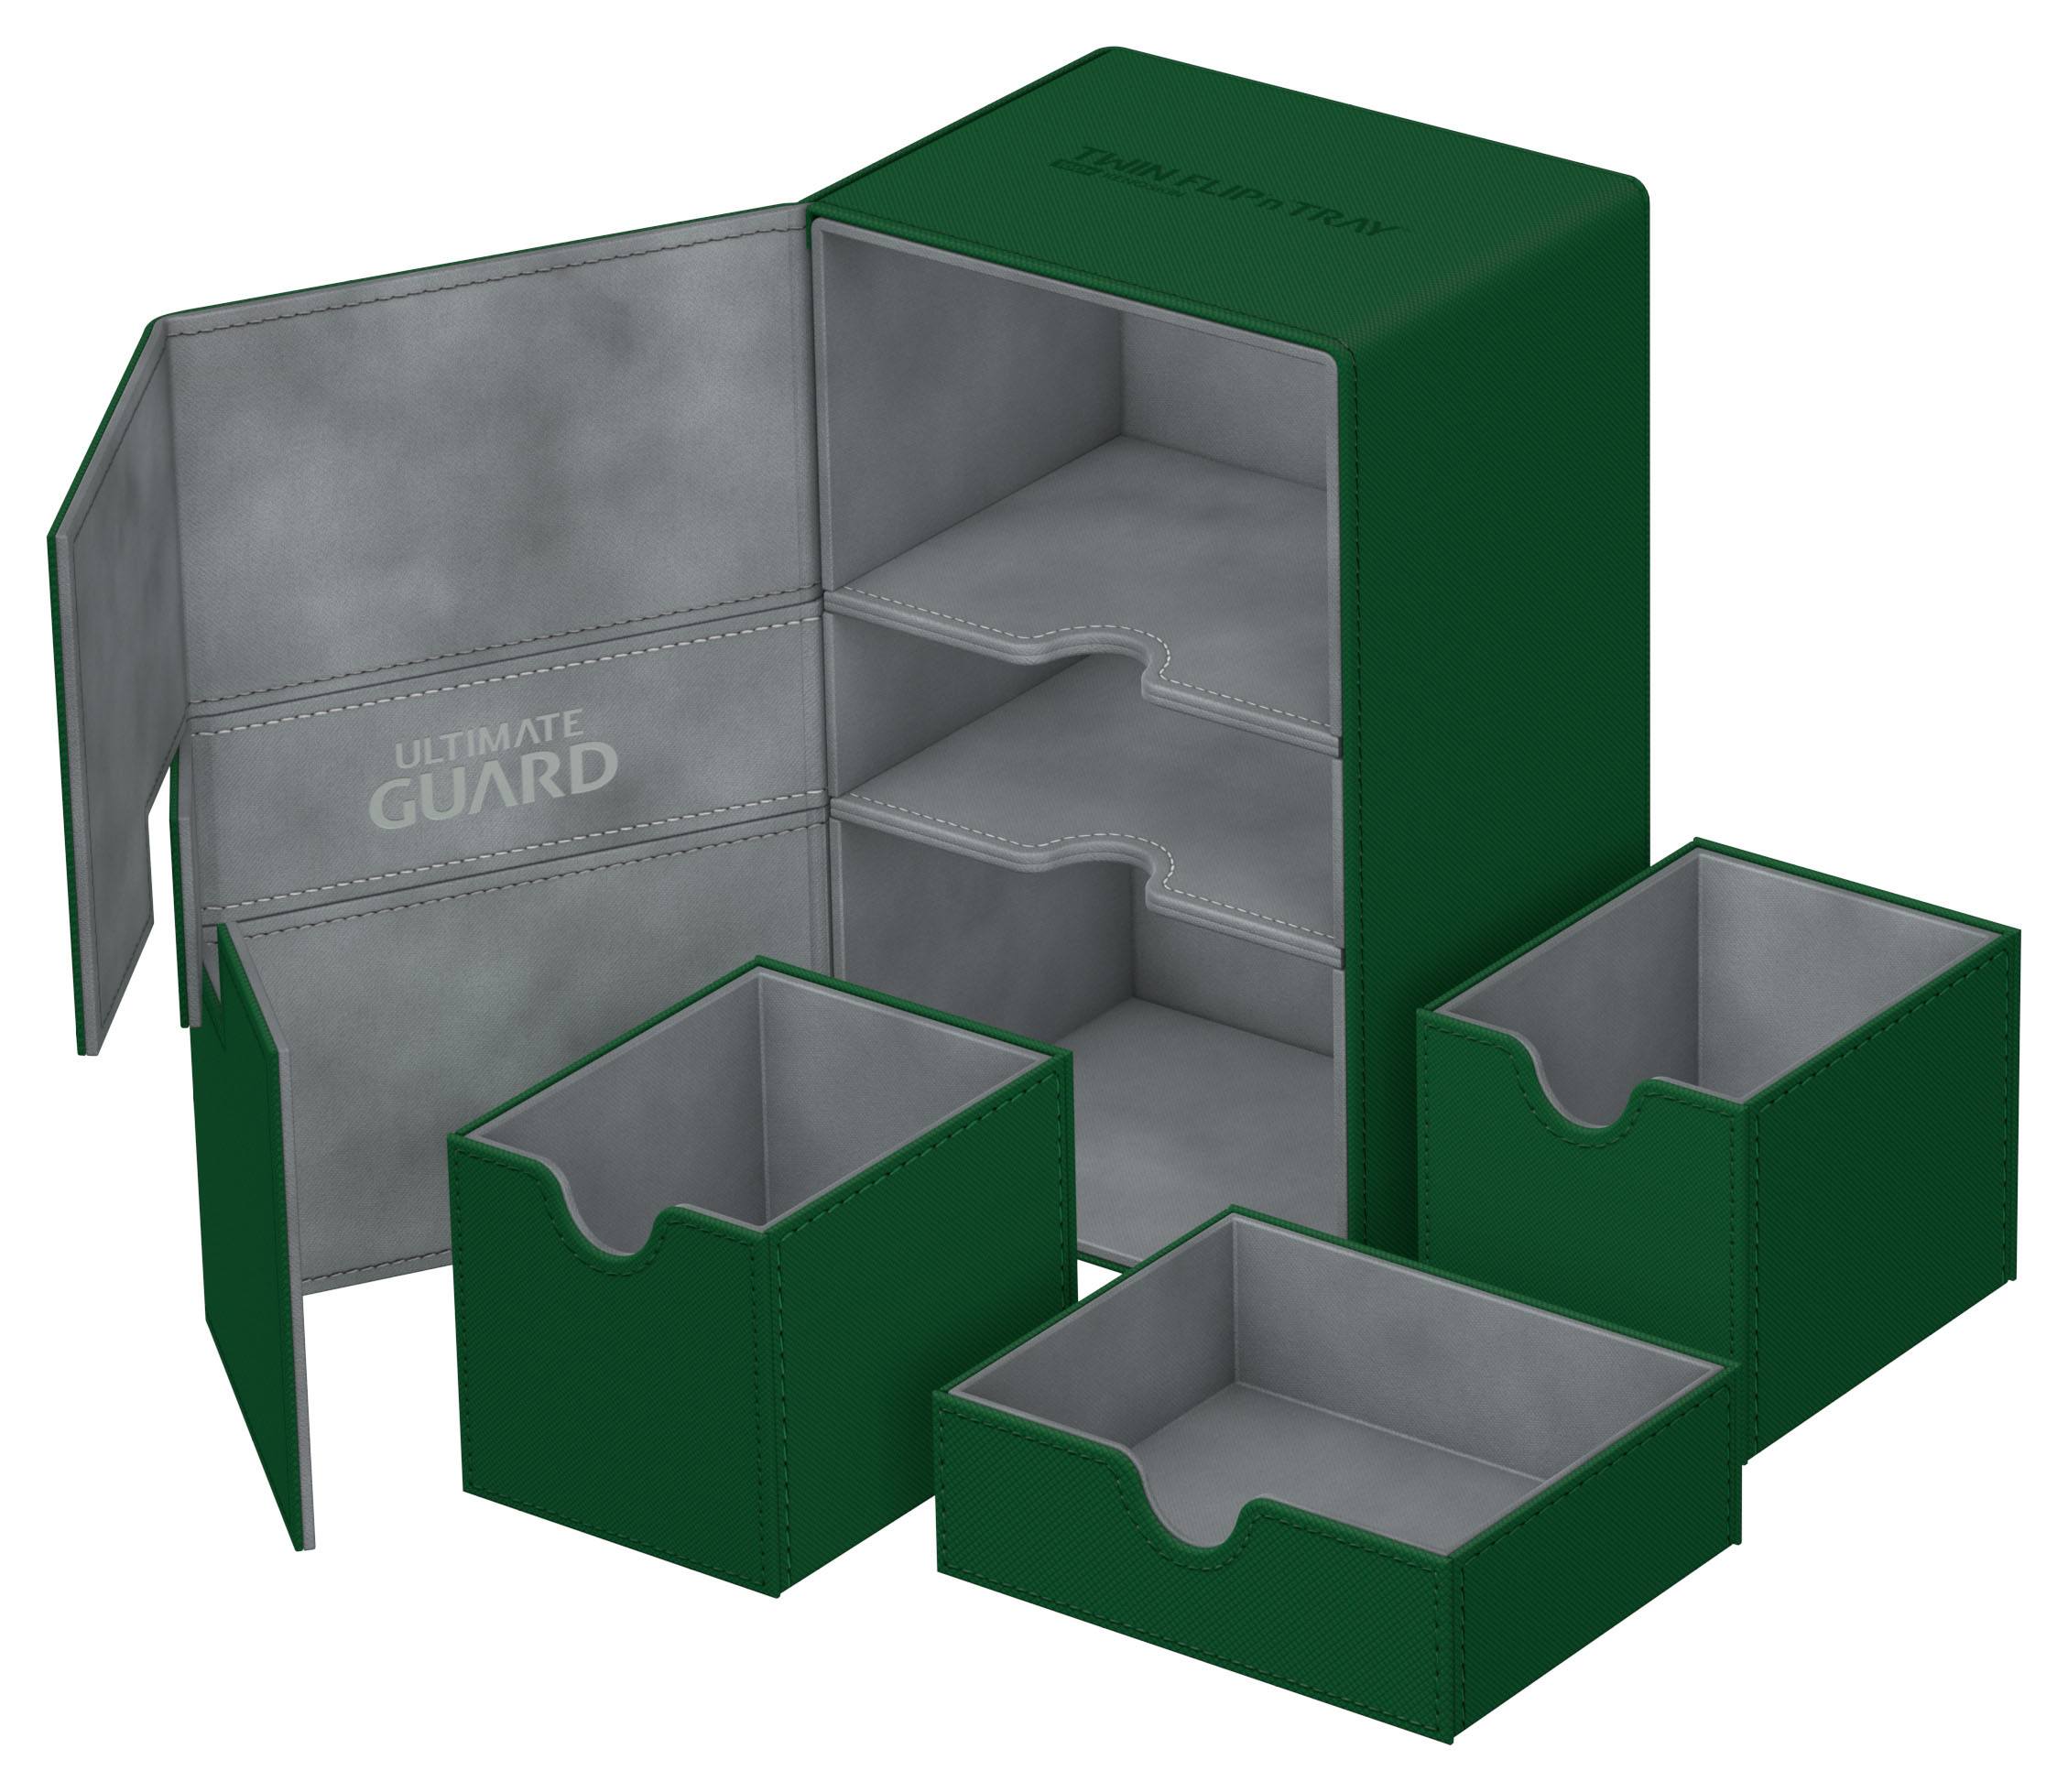 Flip´n´Tray Deckbox 160+ XenoSkin Ultimate Guard grün